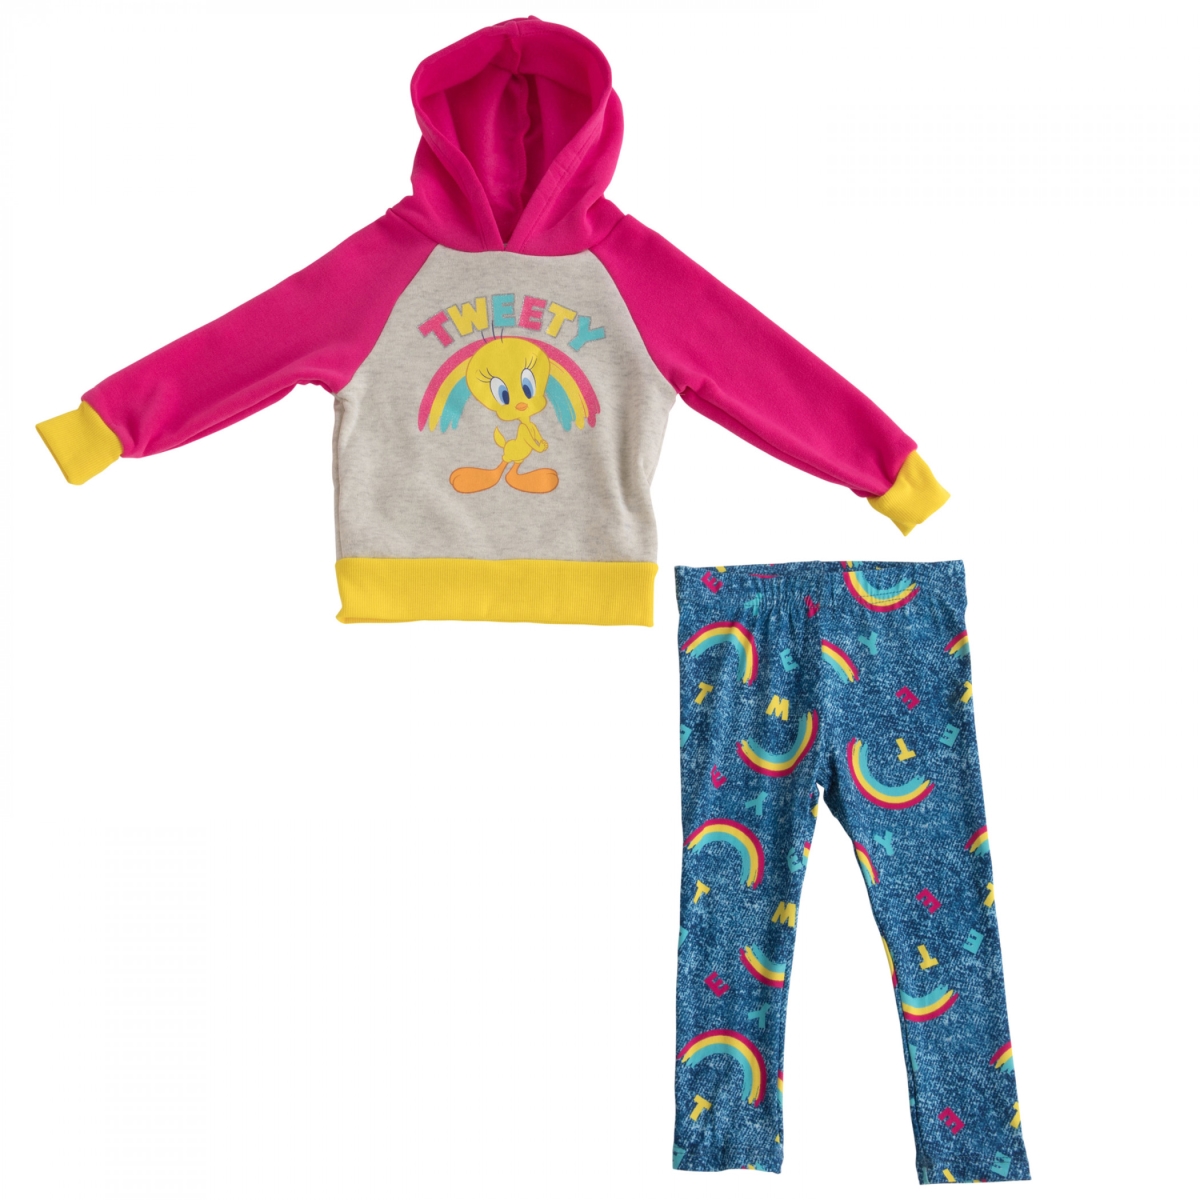 Looney Tunes 850072-toddler3t Looney Tunes Tweety Bird Rainbow Infant Fleece Jacket Set - Toddler 3T - 2 Piece